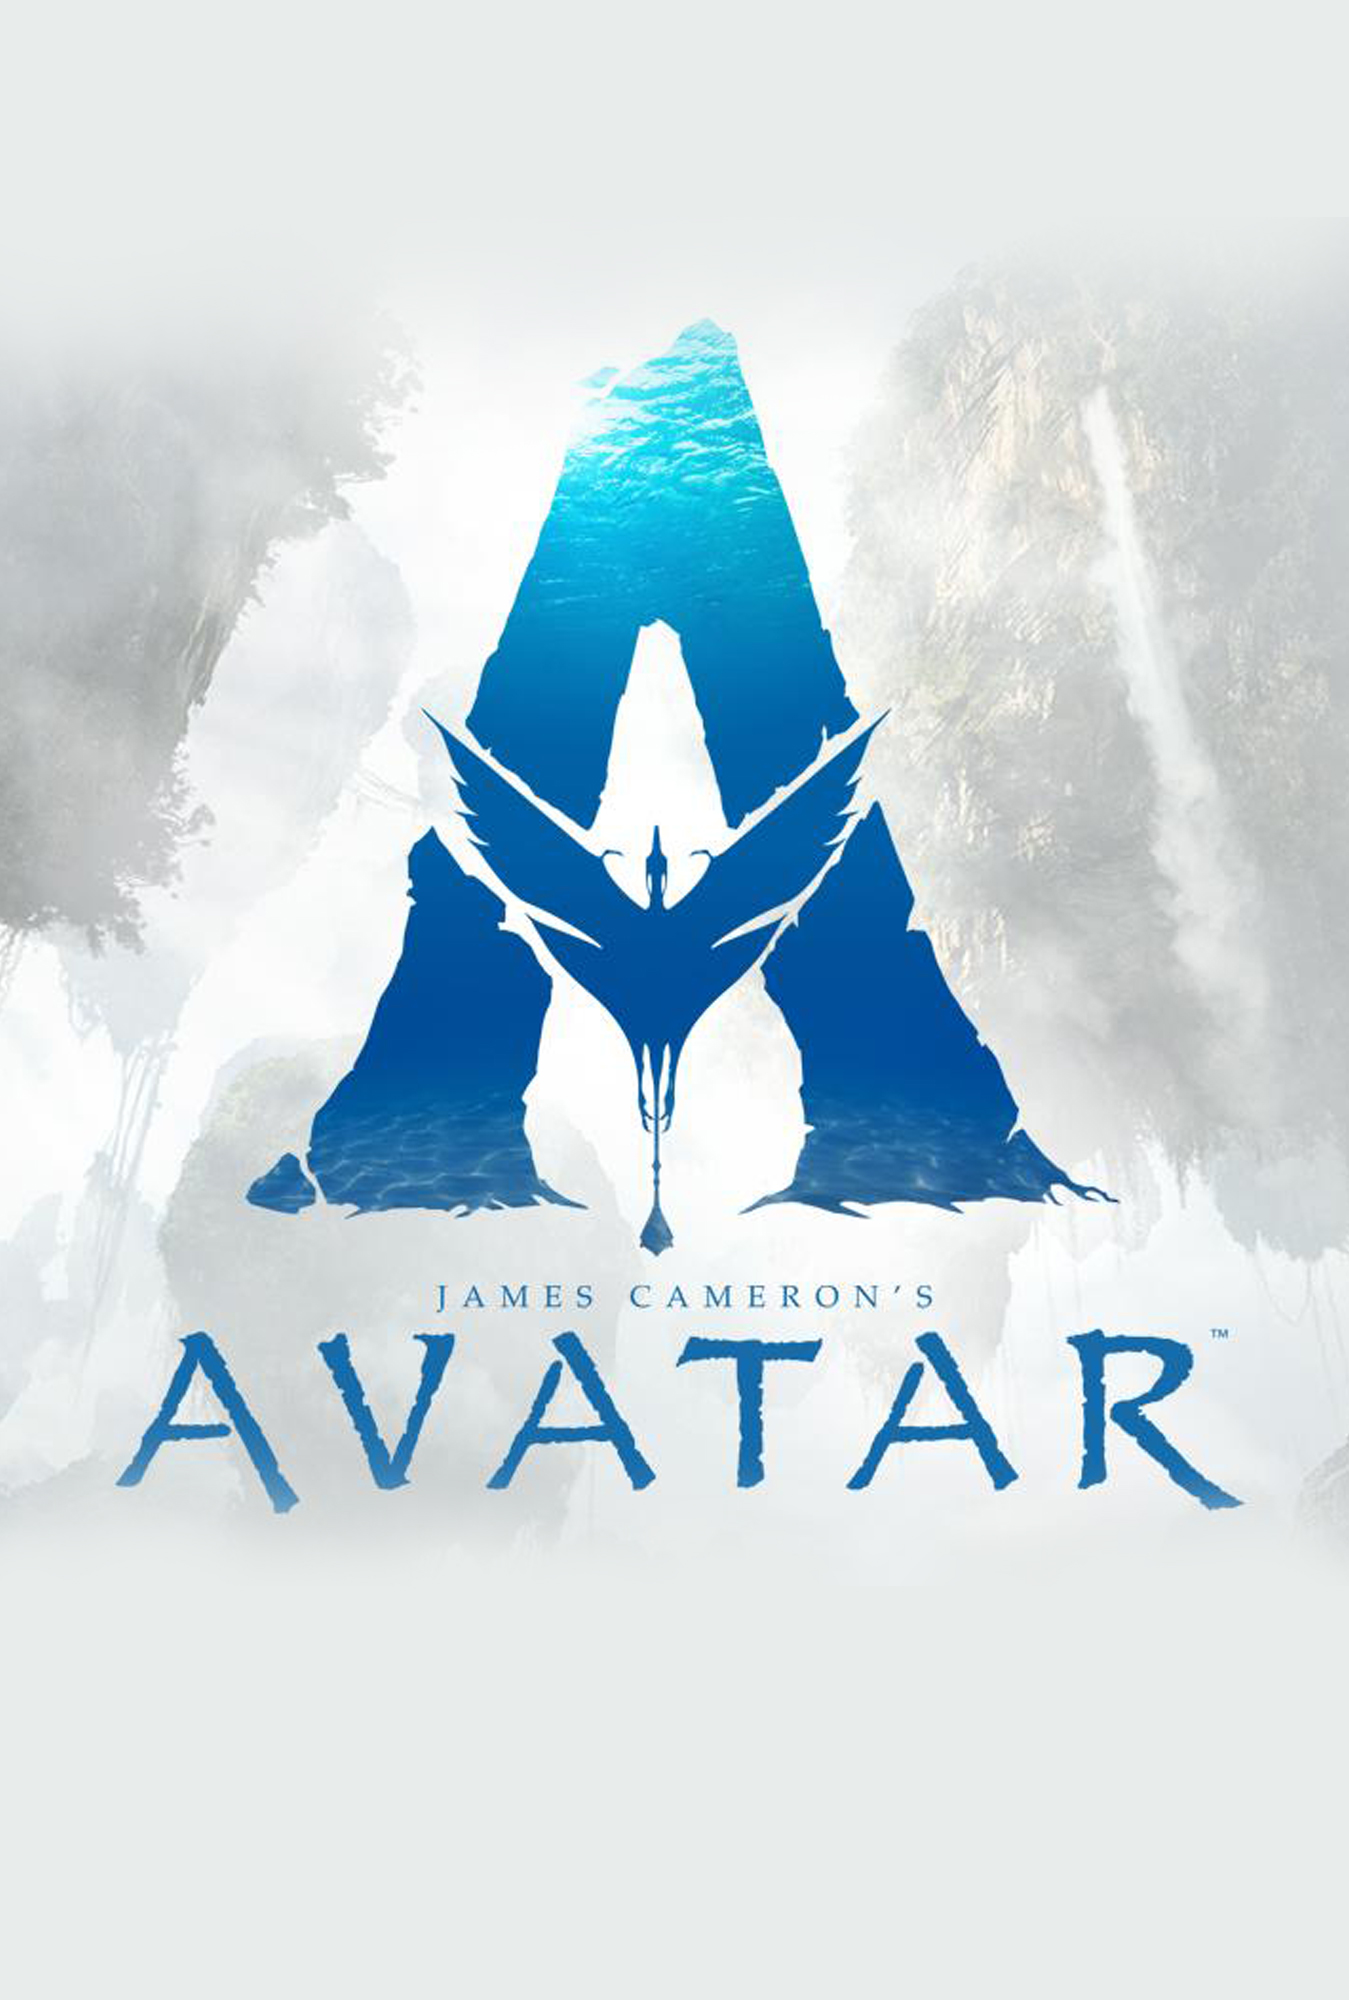 Gallery Avatar film  Avatar Wiki  Fandom